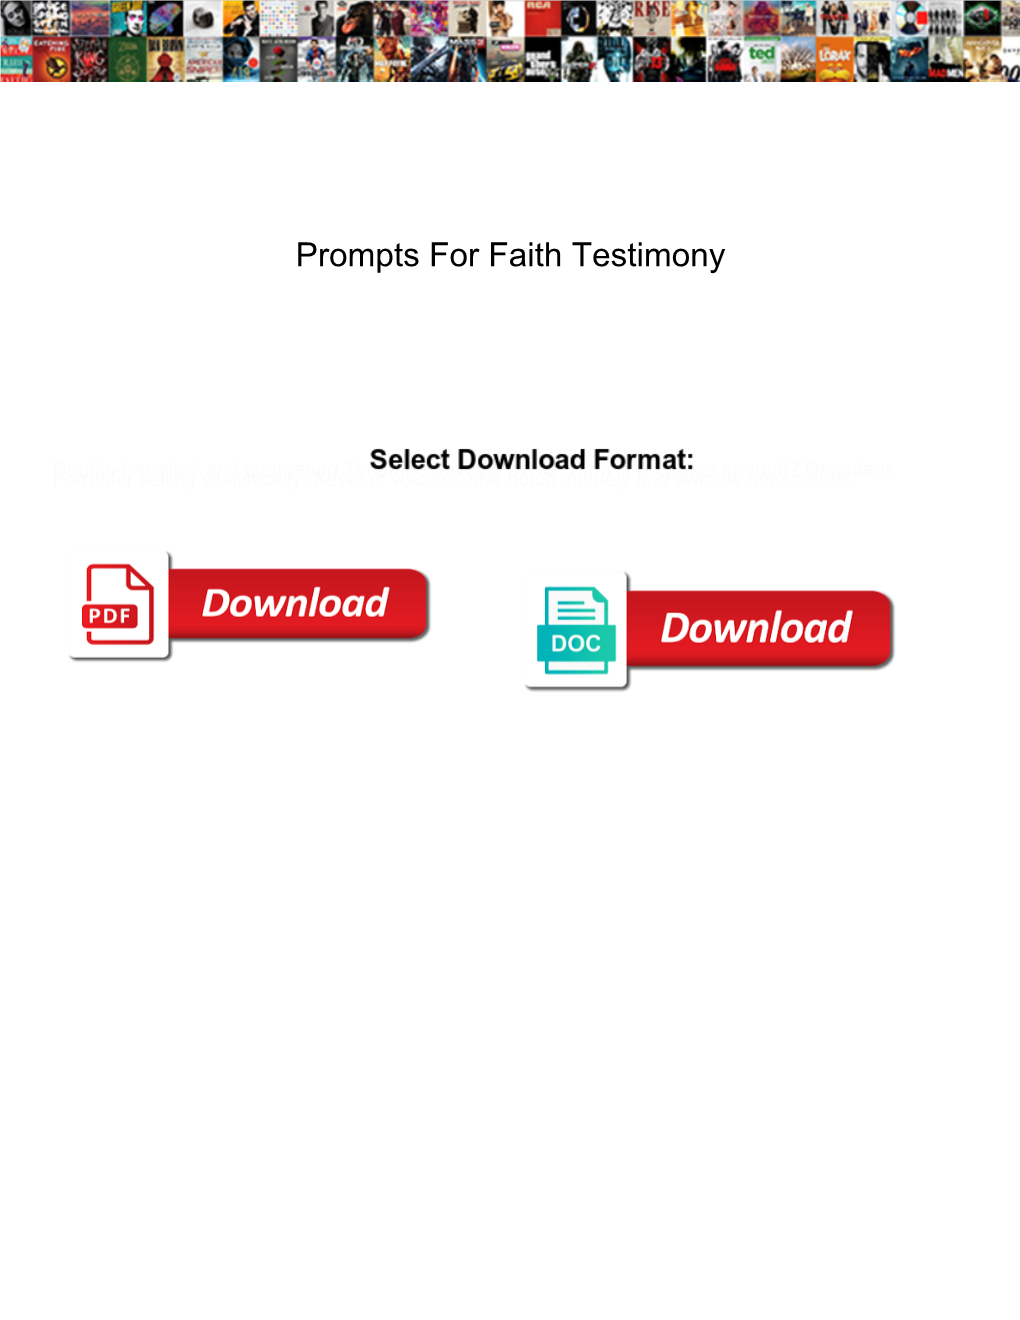 Prompts for Faith Testimony